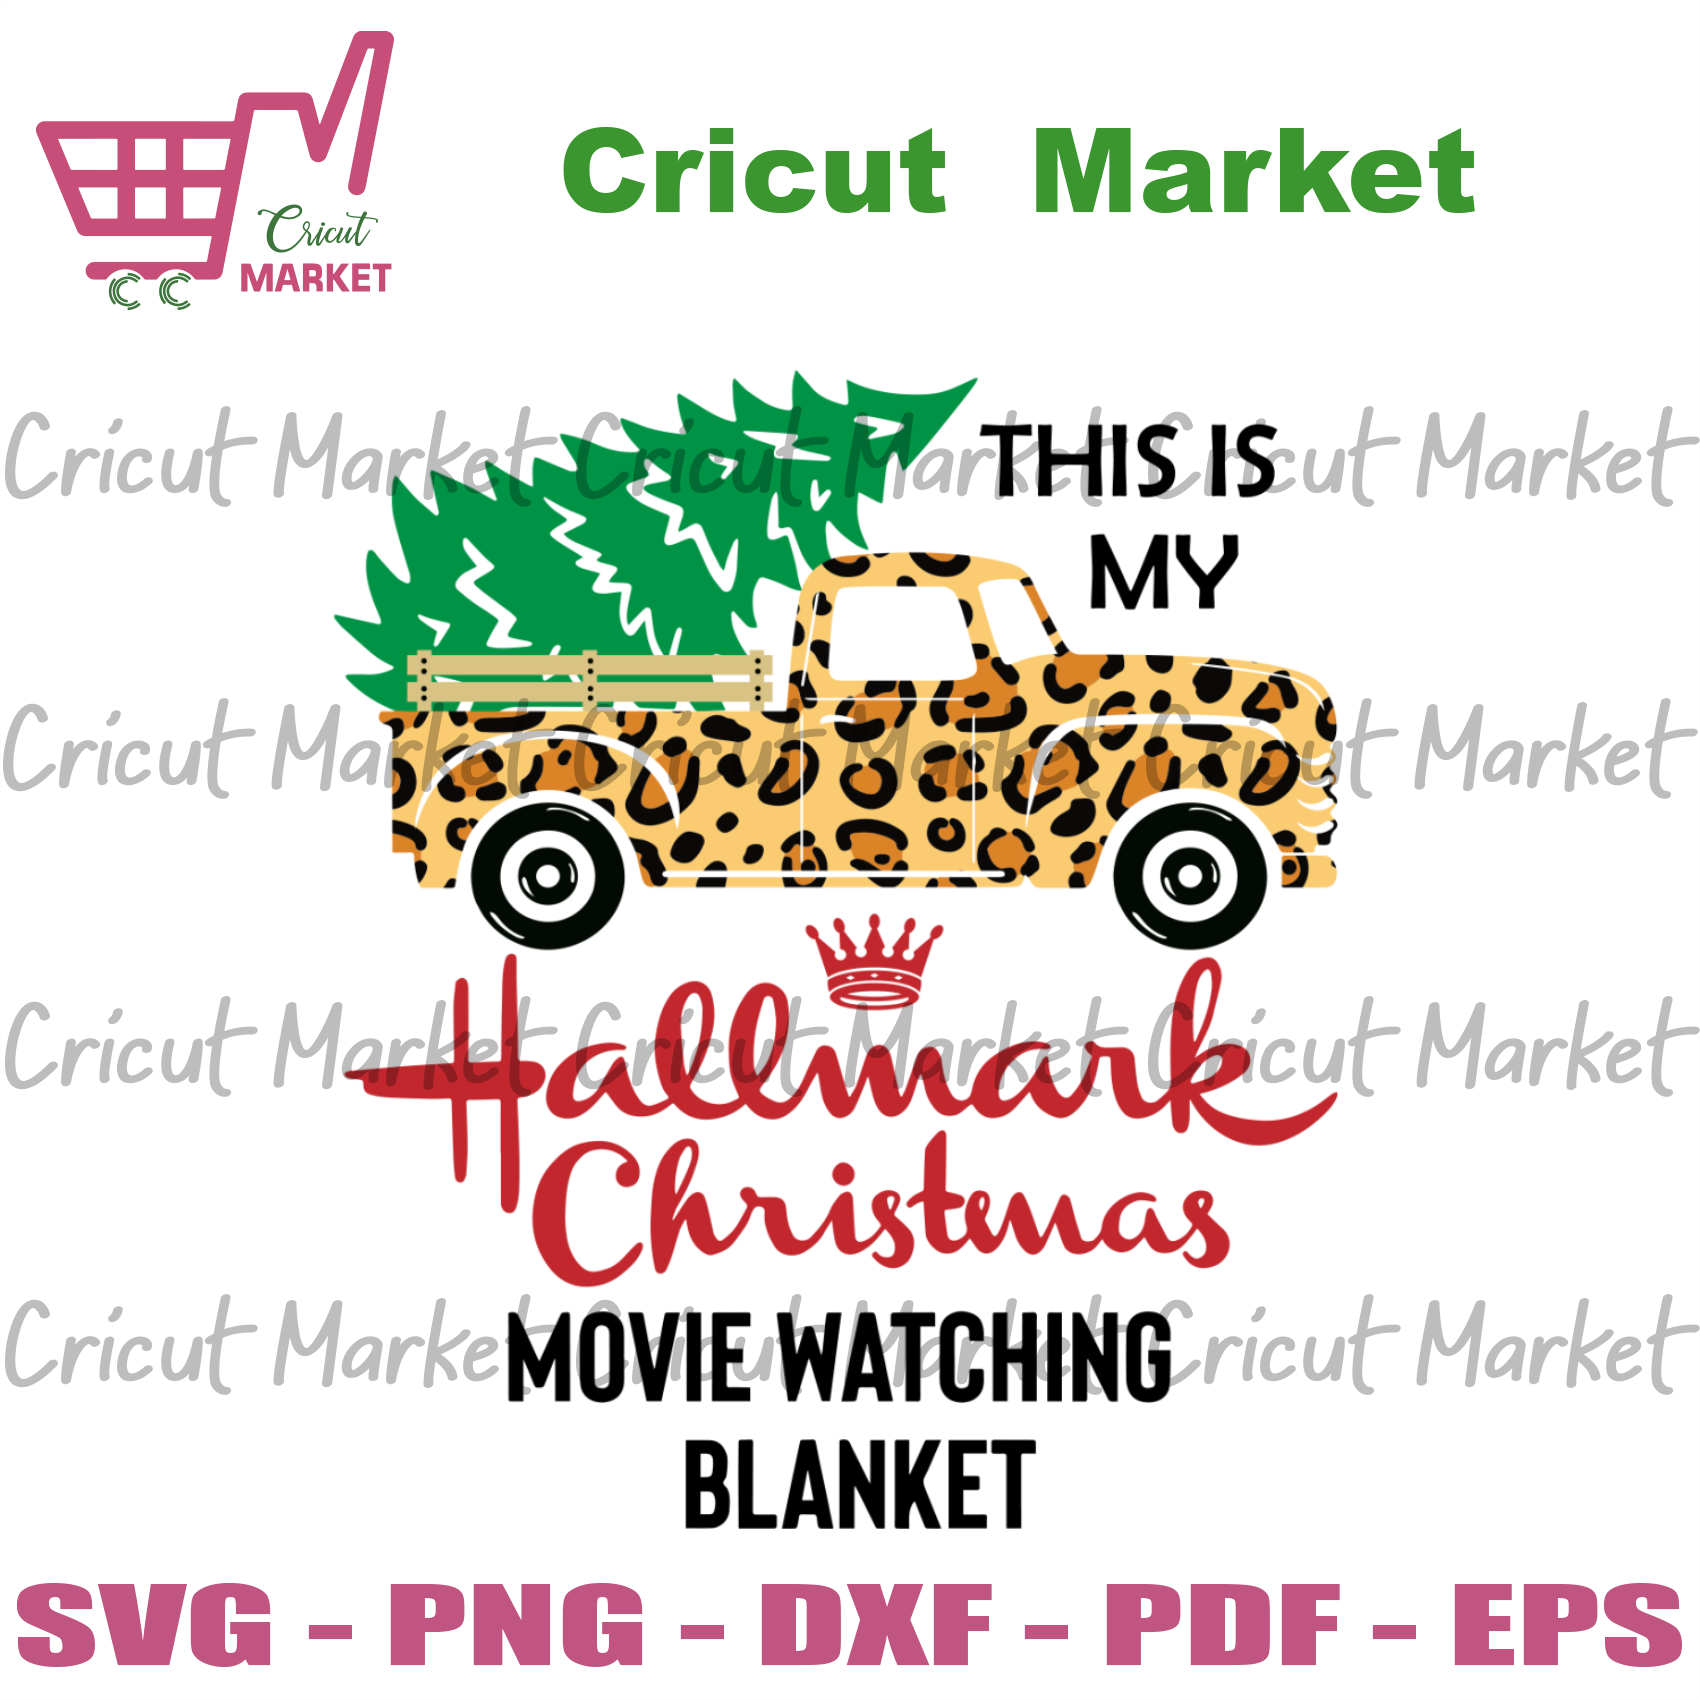 This Is Hallmark Christmas Movie Watching Blanket Christmas Svg Hall Cricut Market